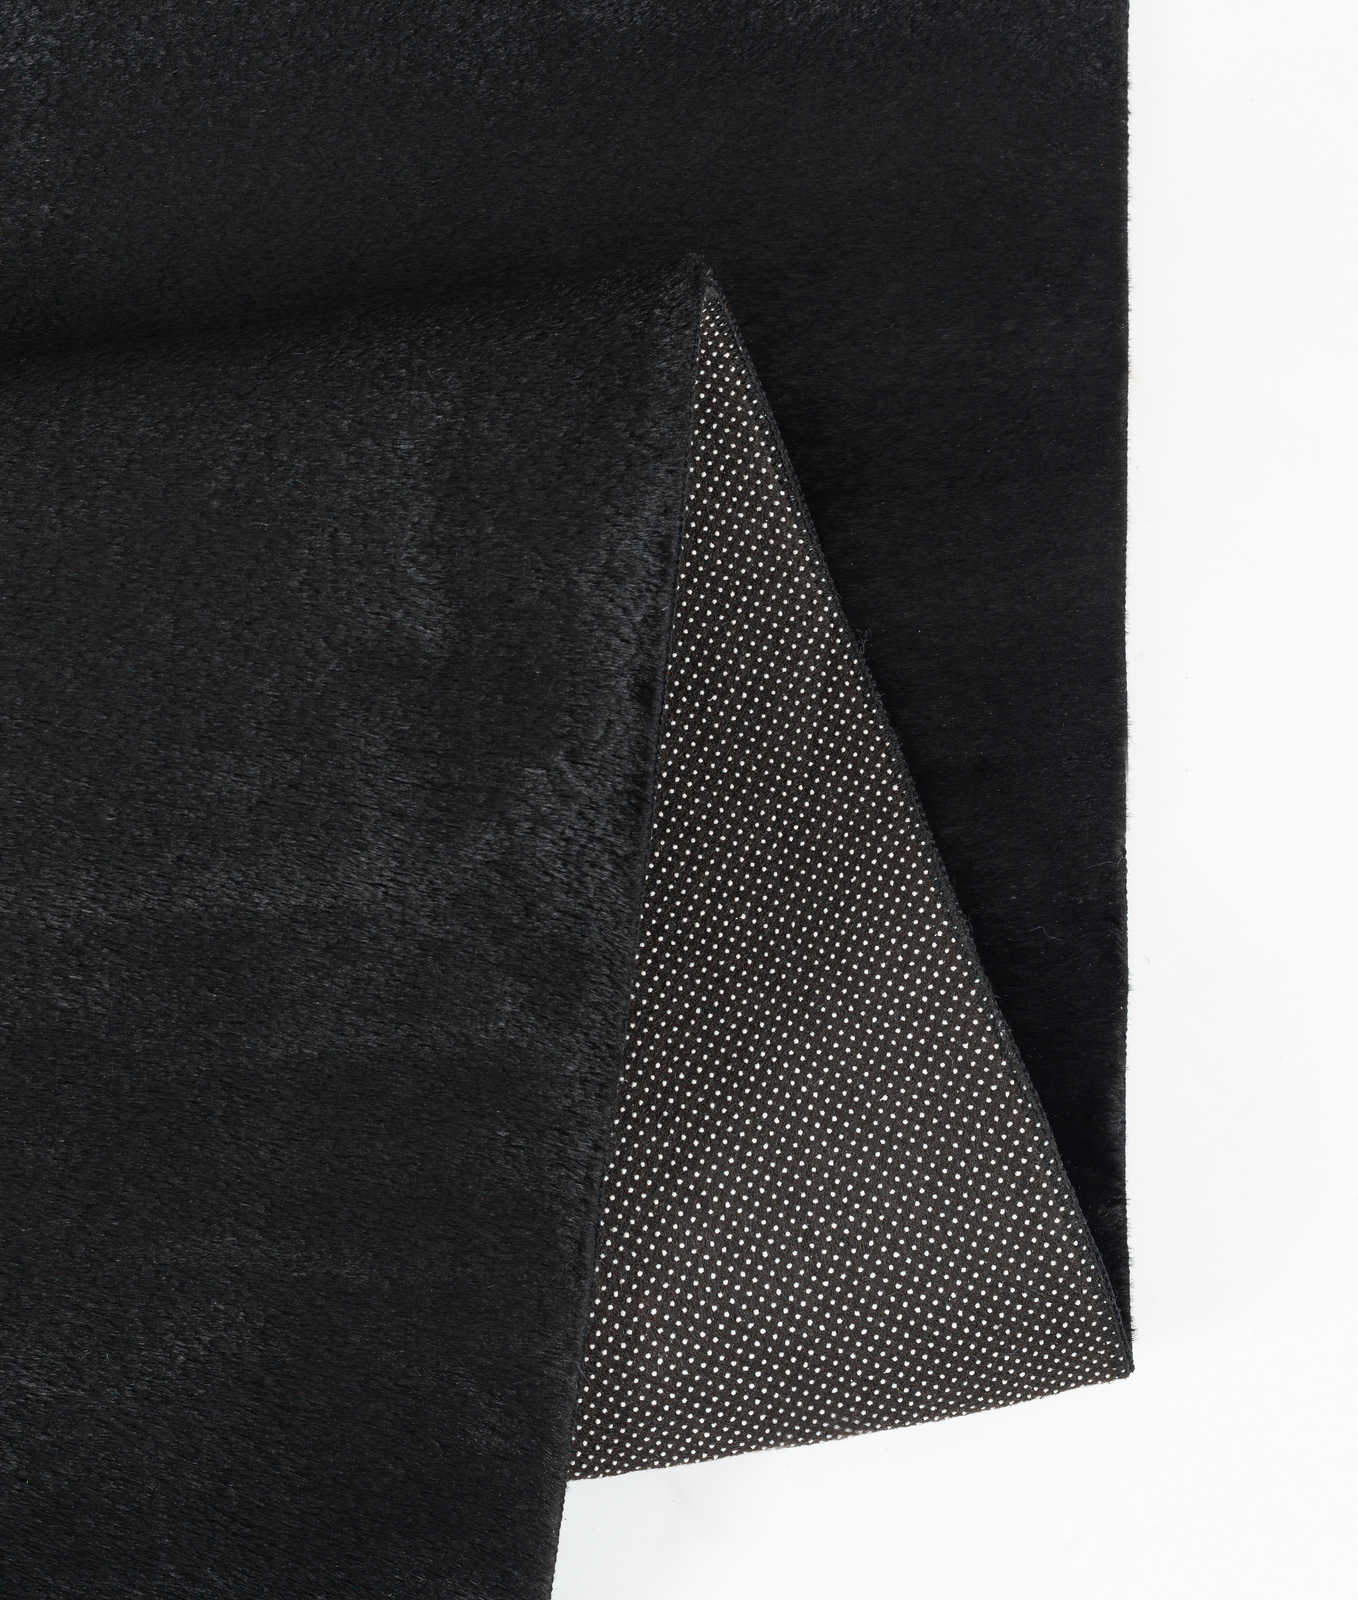             Knuffelzacht hoogpolig tapijt in zwart - 160 x 117 cm
        